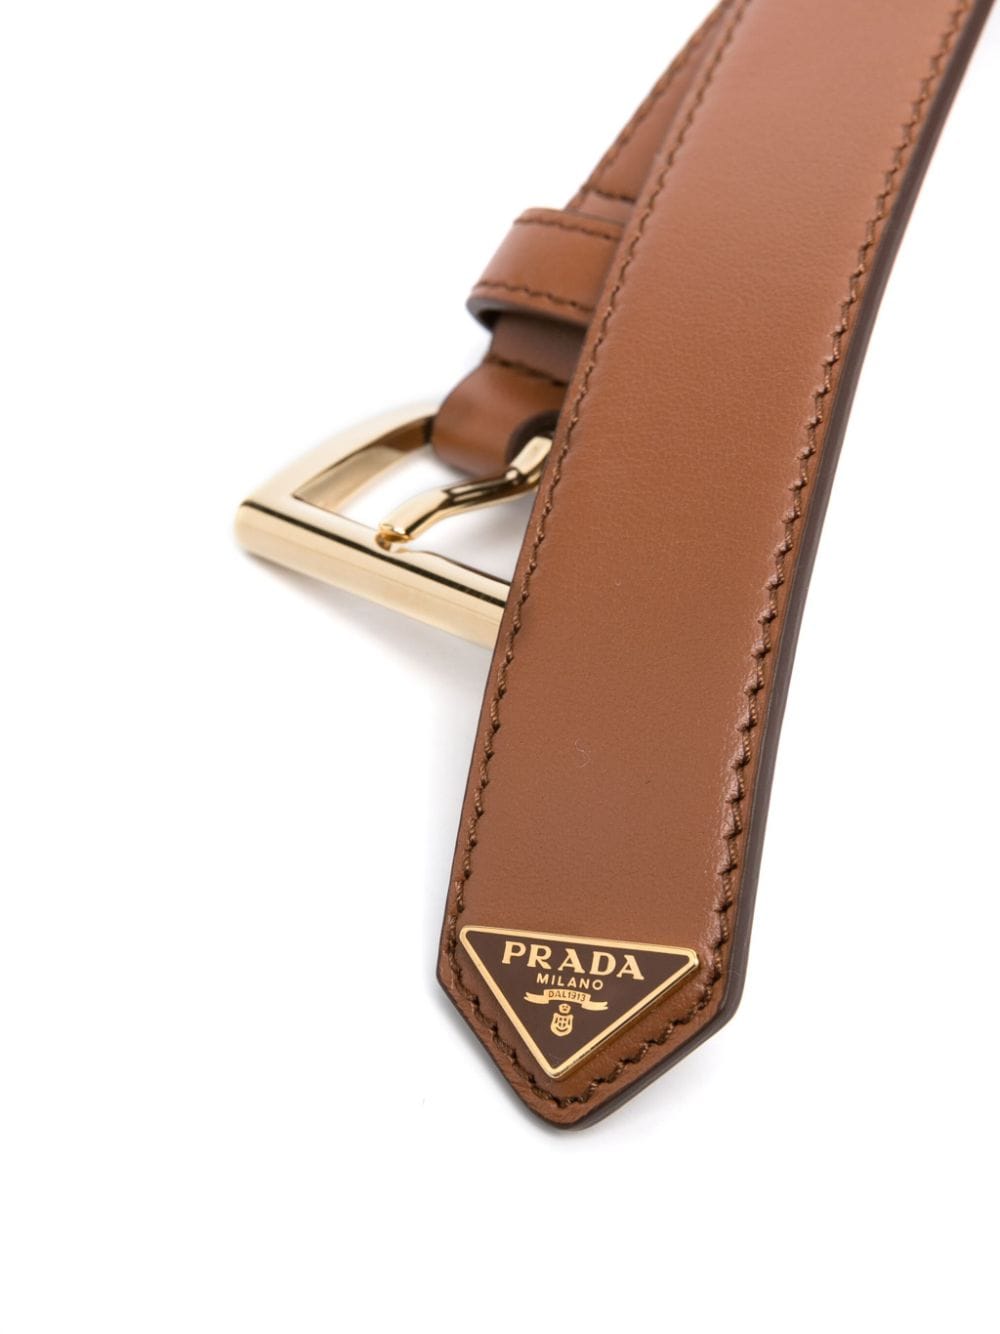 PRADA buckle-fastened leather belt-3